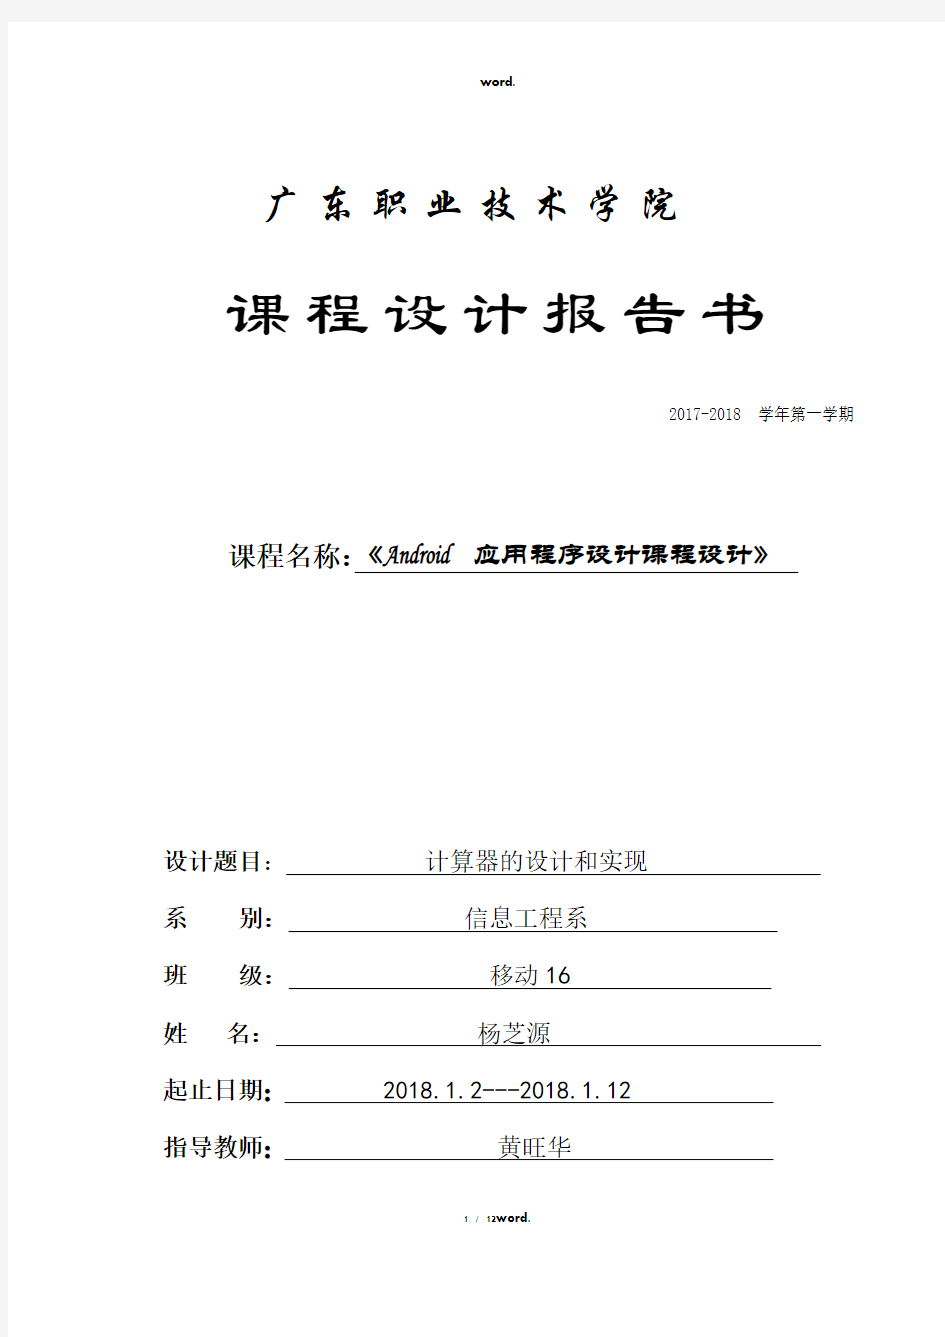 《 Android应用程序设计课程设计》课程设计报告书(移动16-049-杨芝源)#优选.